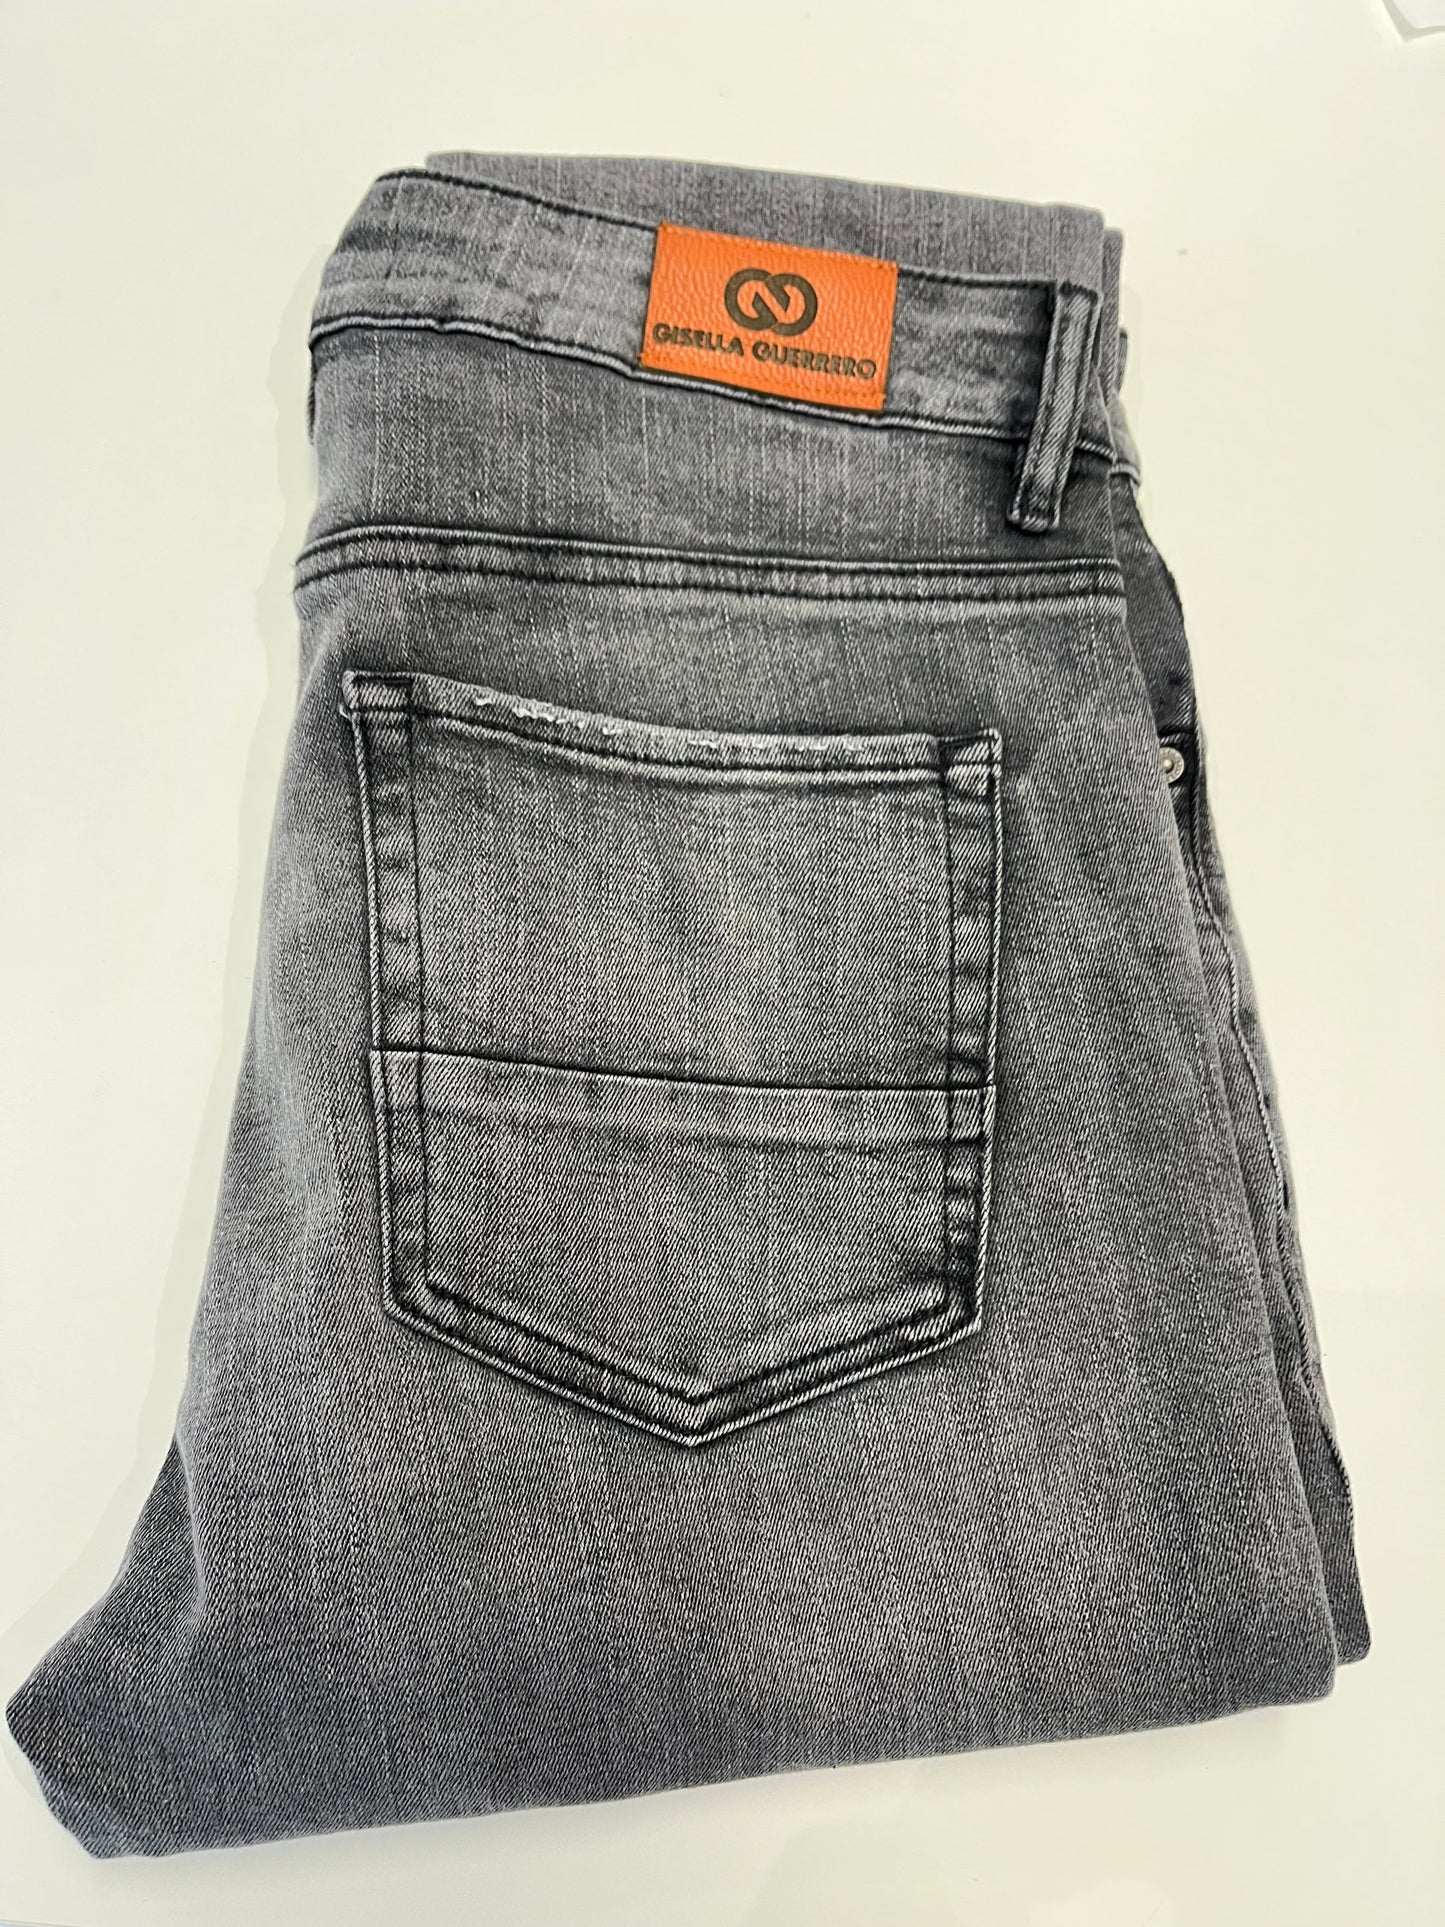 GG028: Gray Denim Jeans